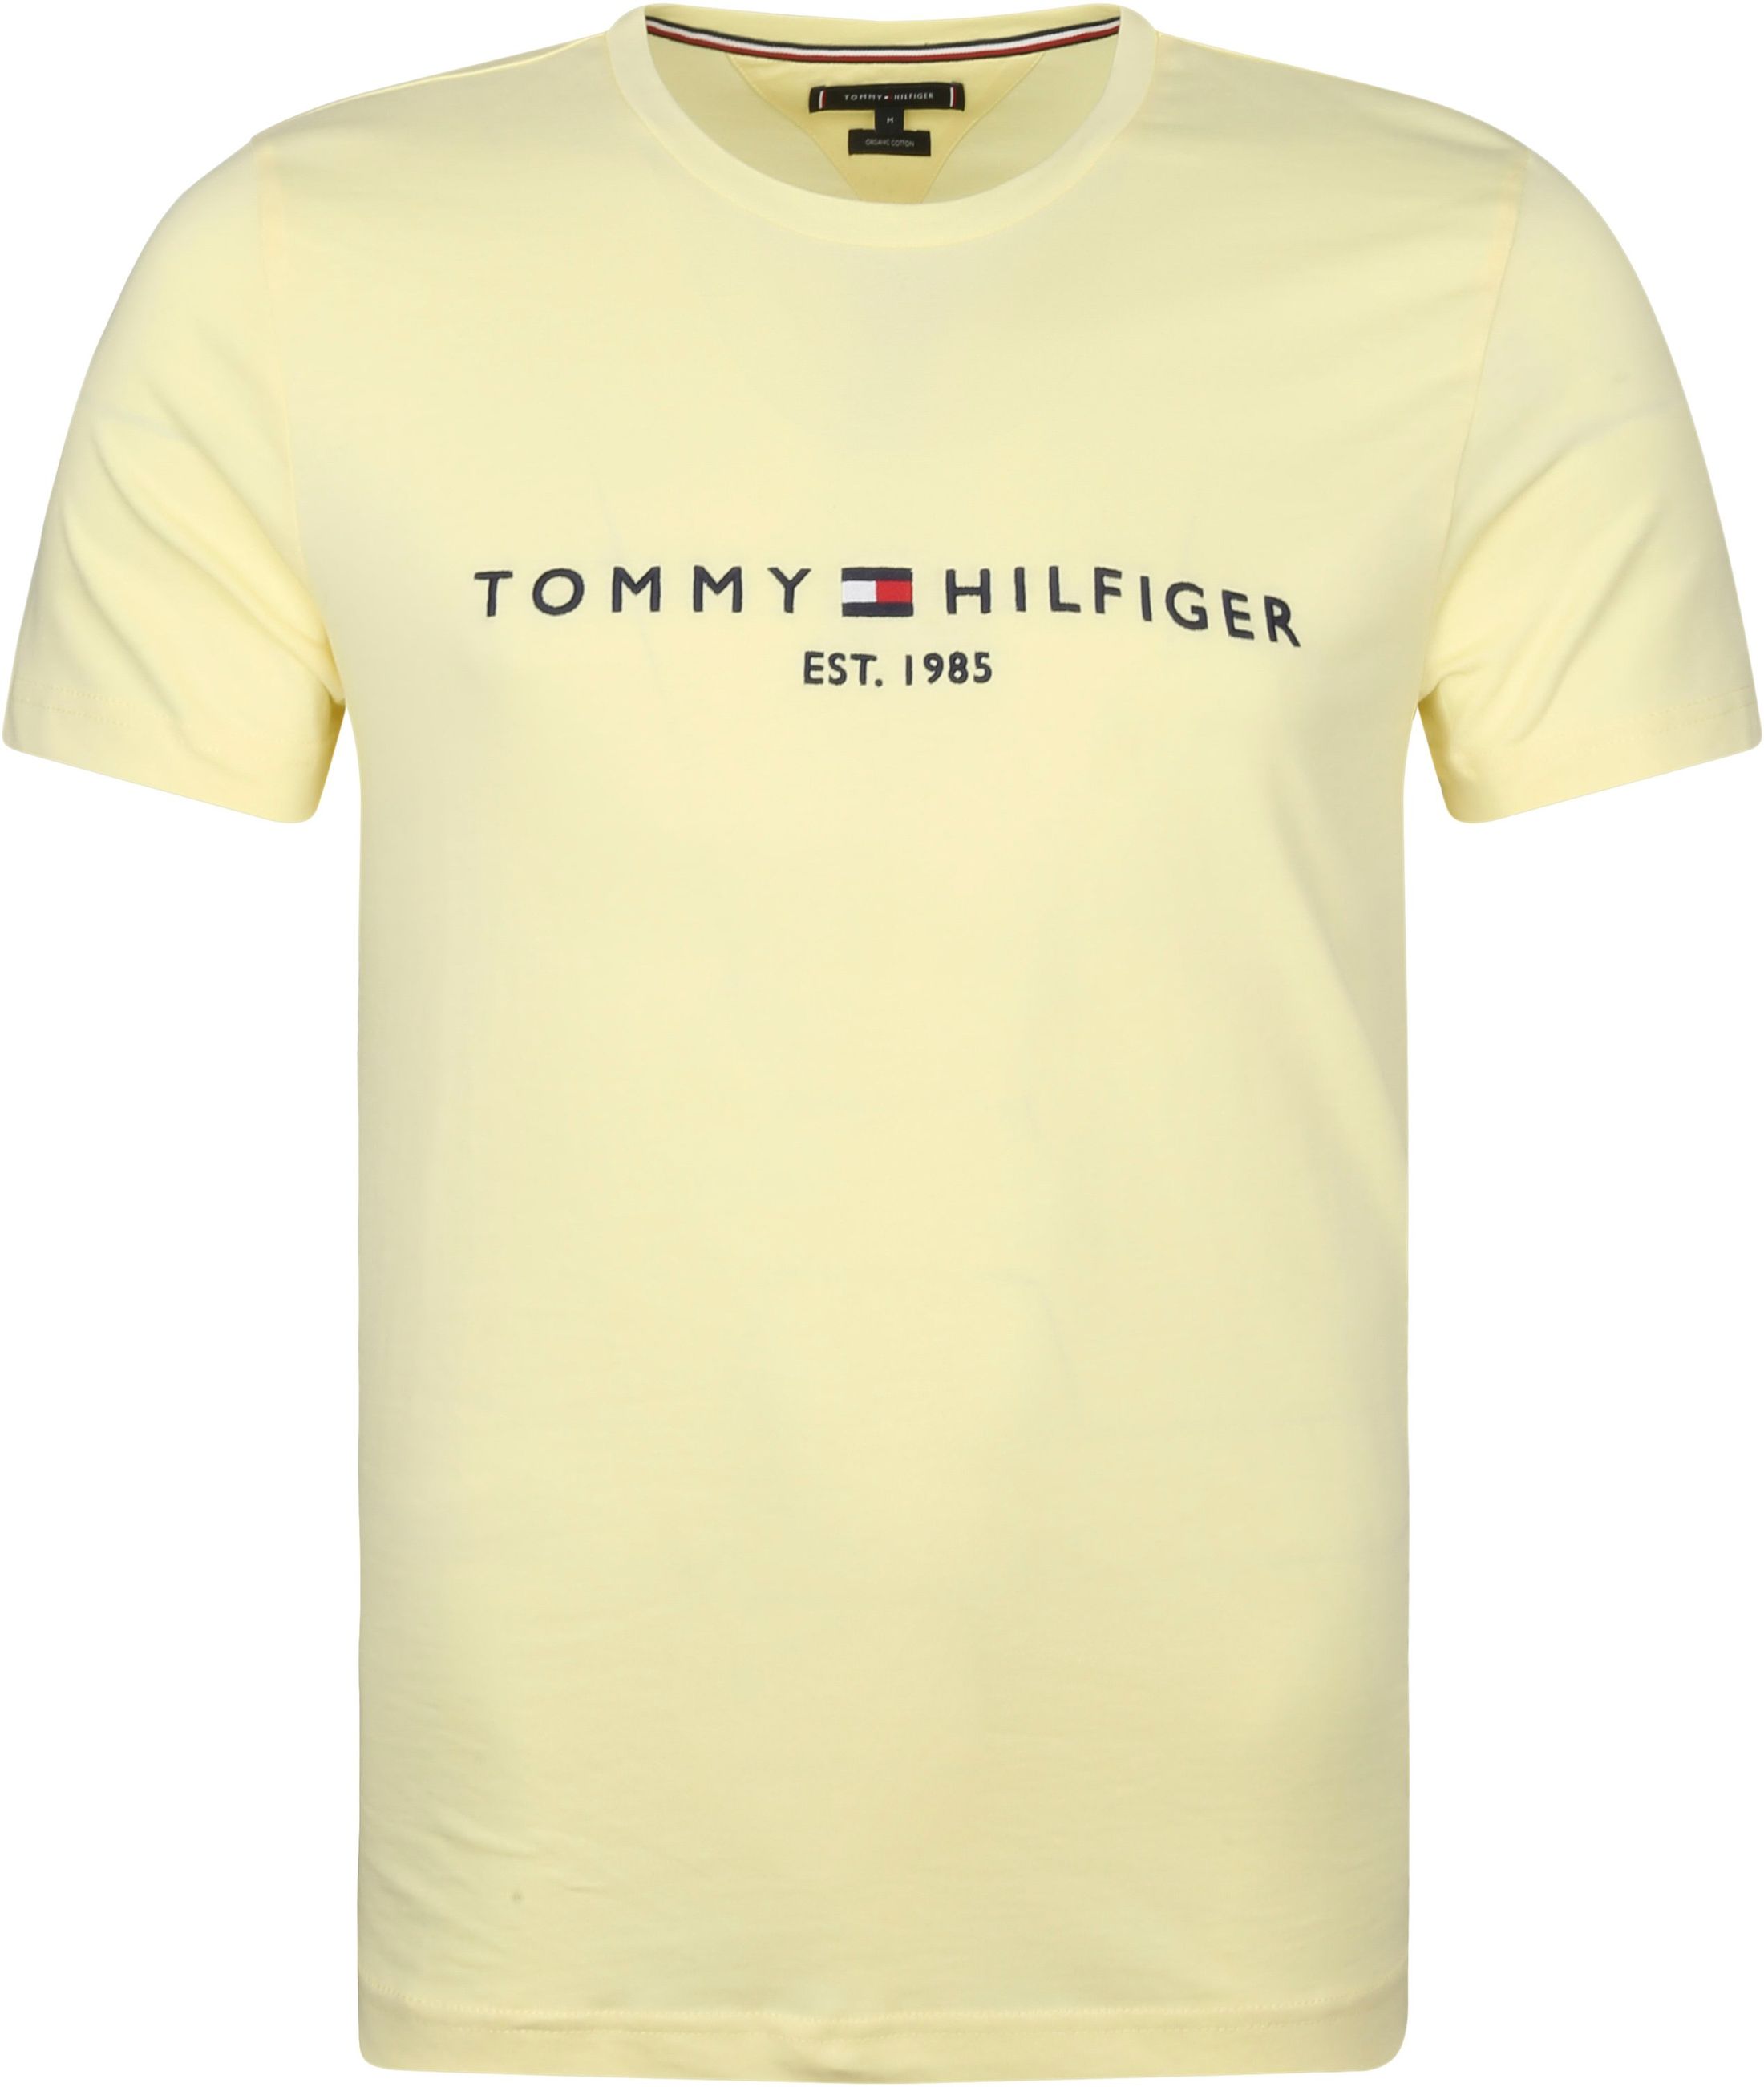 Tommy Hilfiger Logo T Shirt Yellow size L